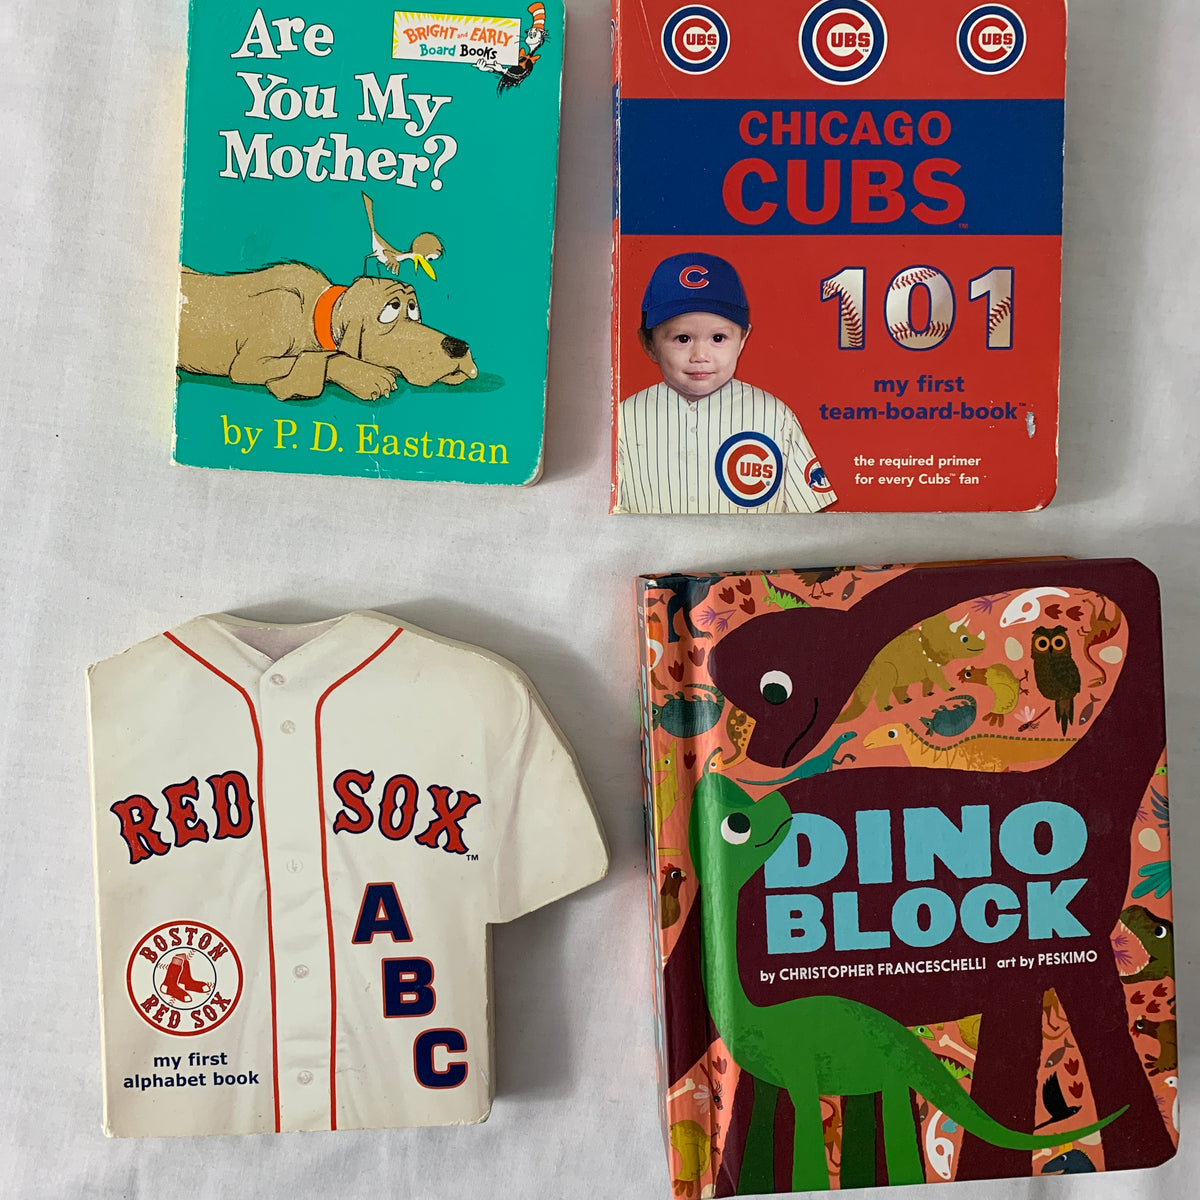  Boston Red Sox ABC my first alphabet book (ABC My